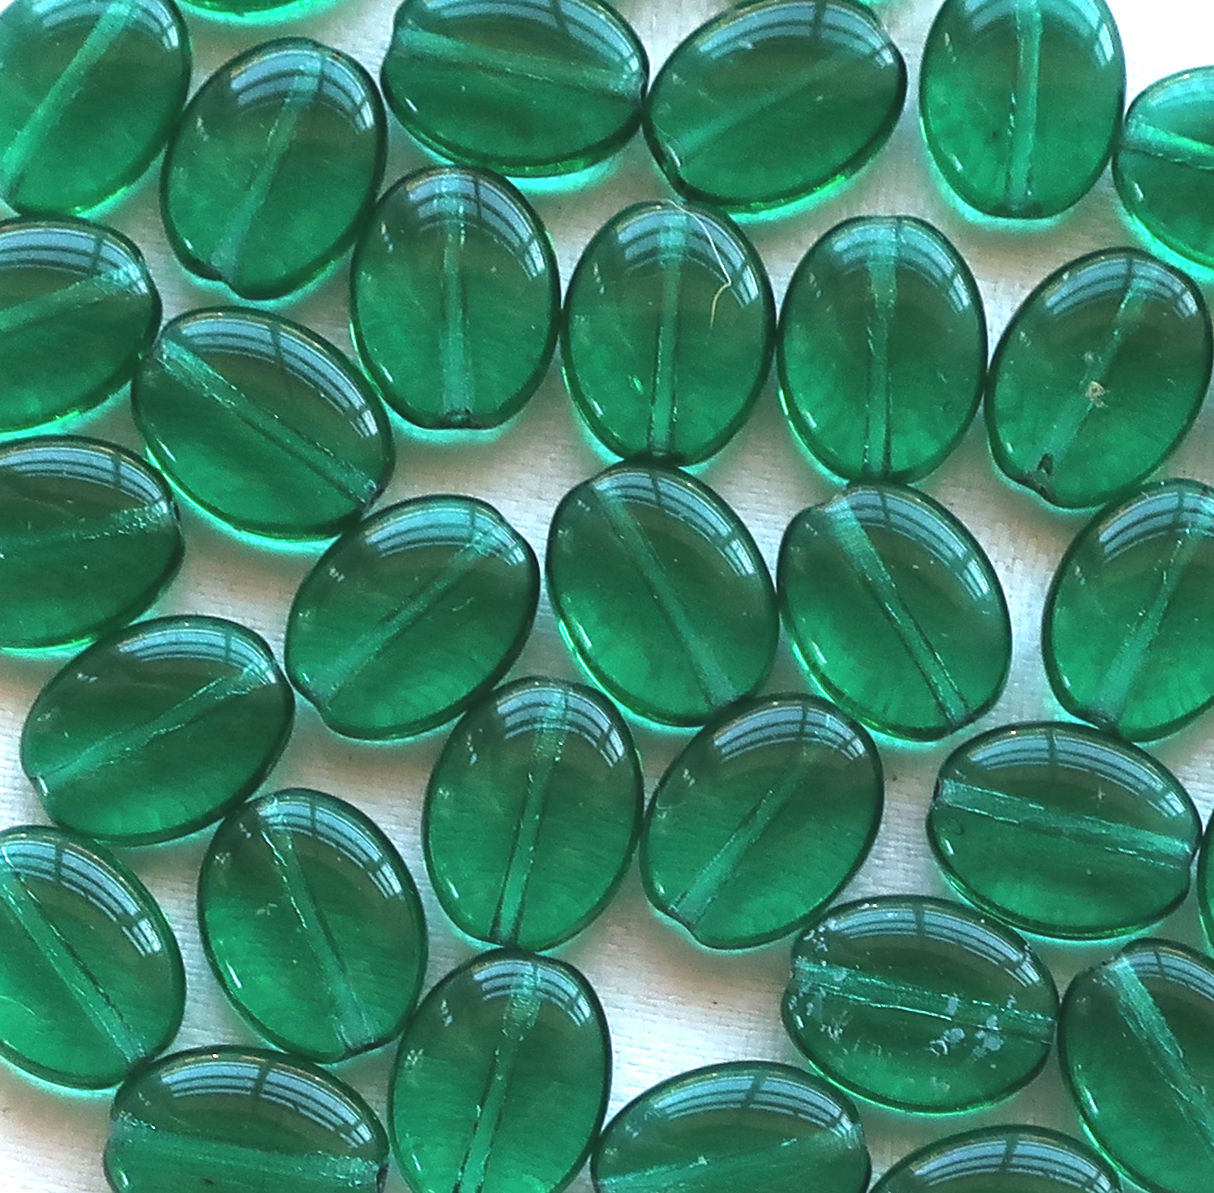 25 Teal Green flat oval Czech Glass beads, 12mm x 9mm pressed